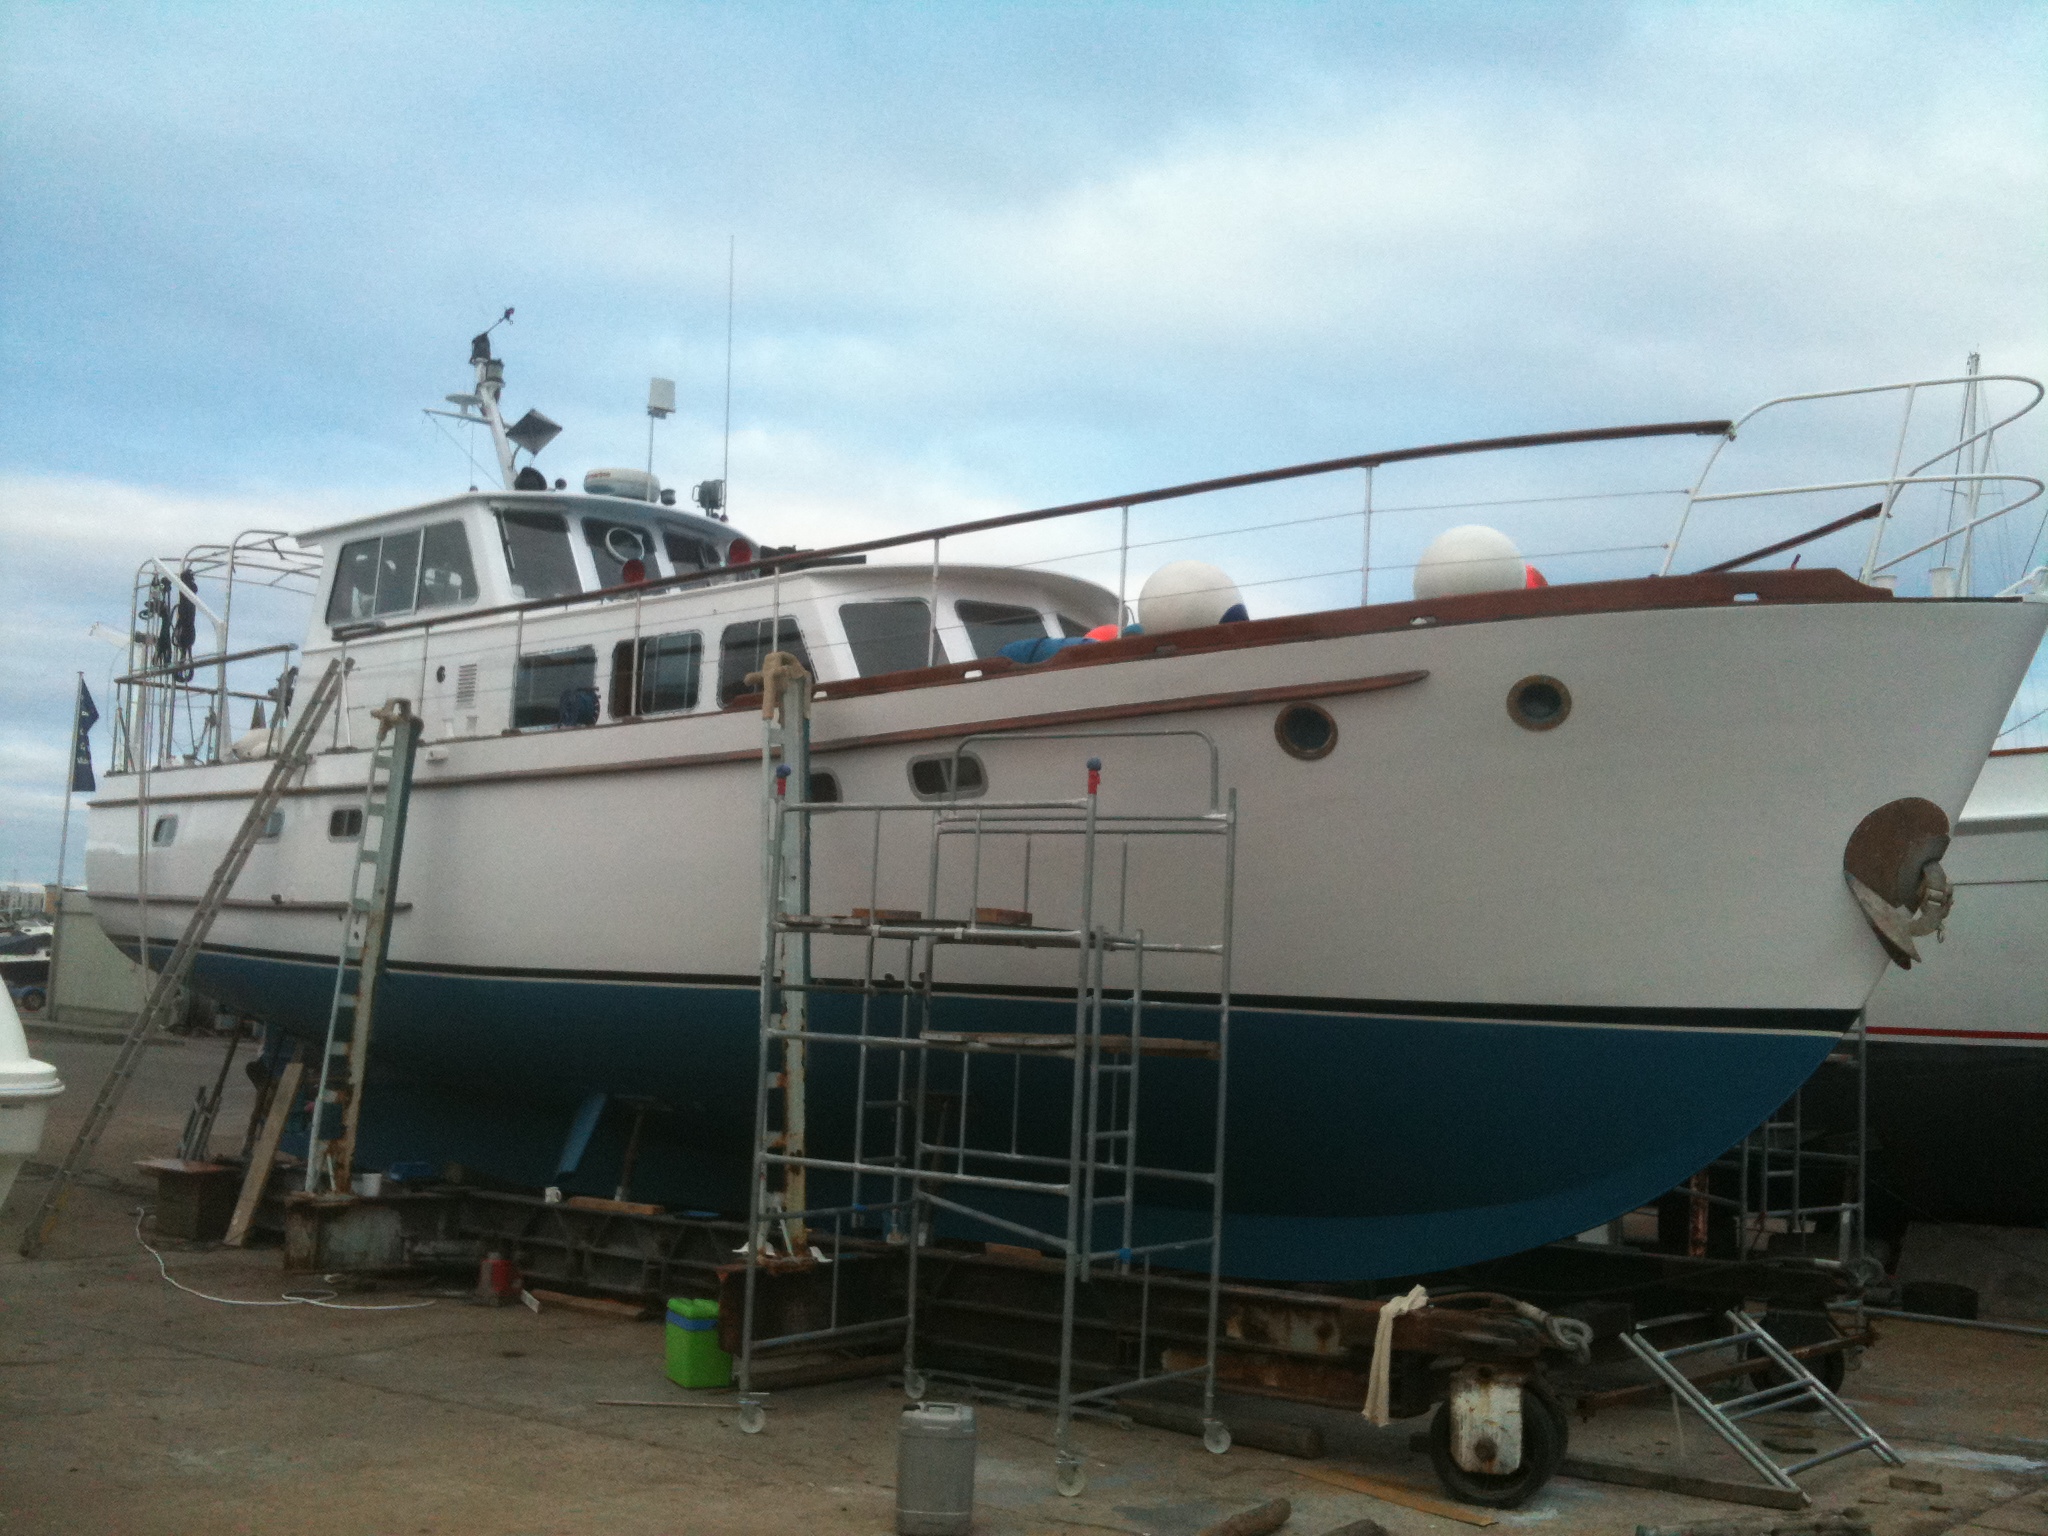 Sailing boat surveys, pre-purchase surveys, inspect specific concerns and damage